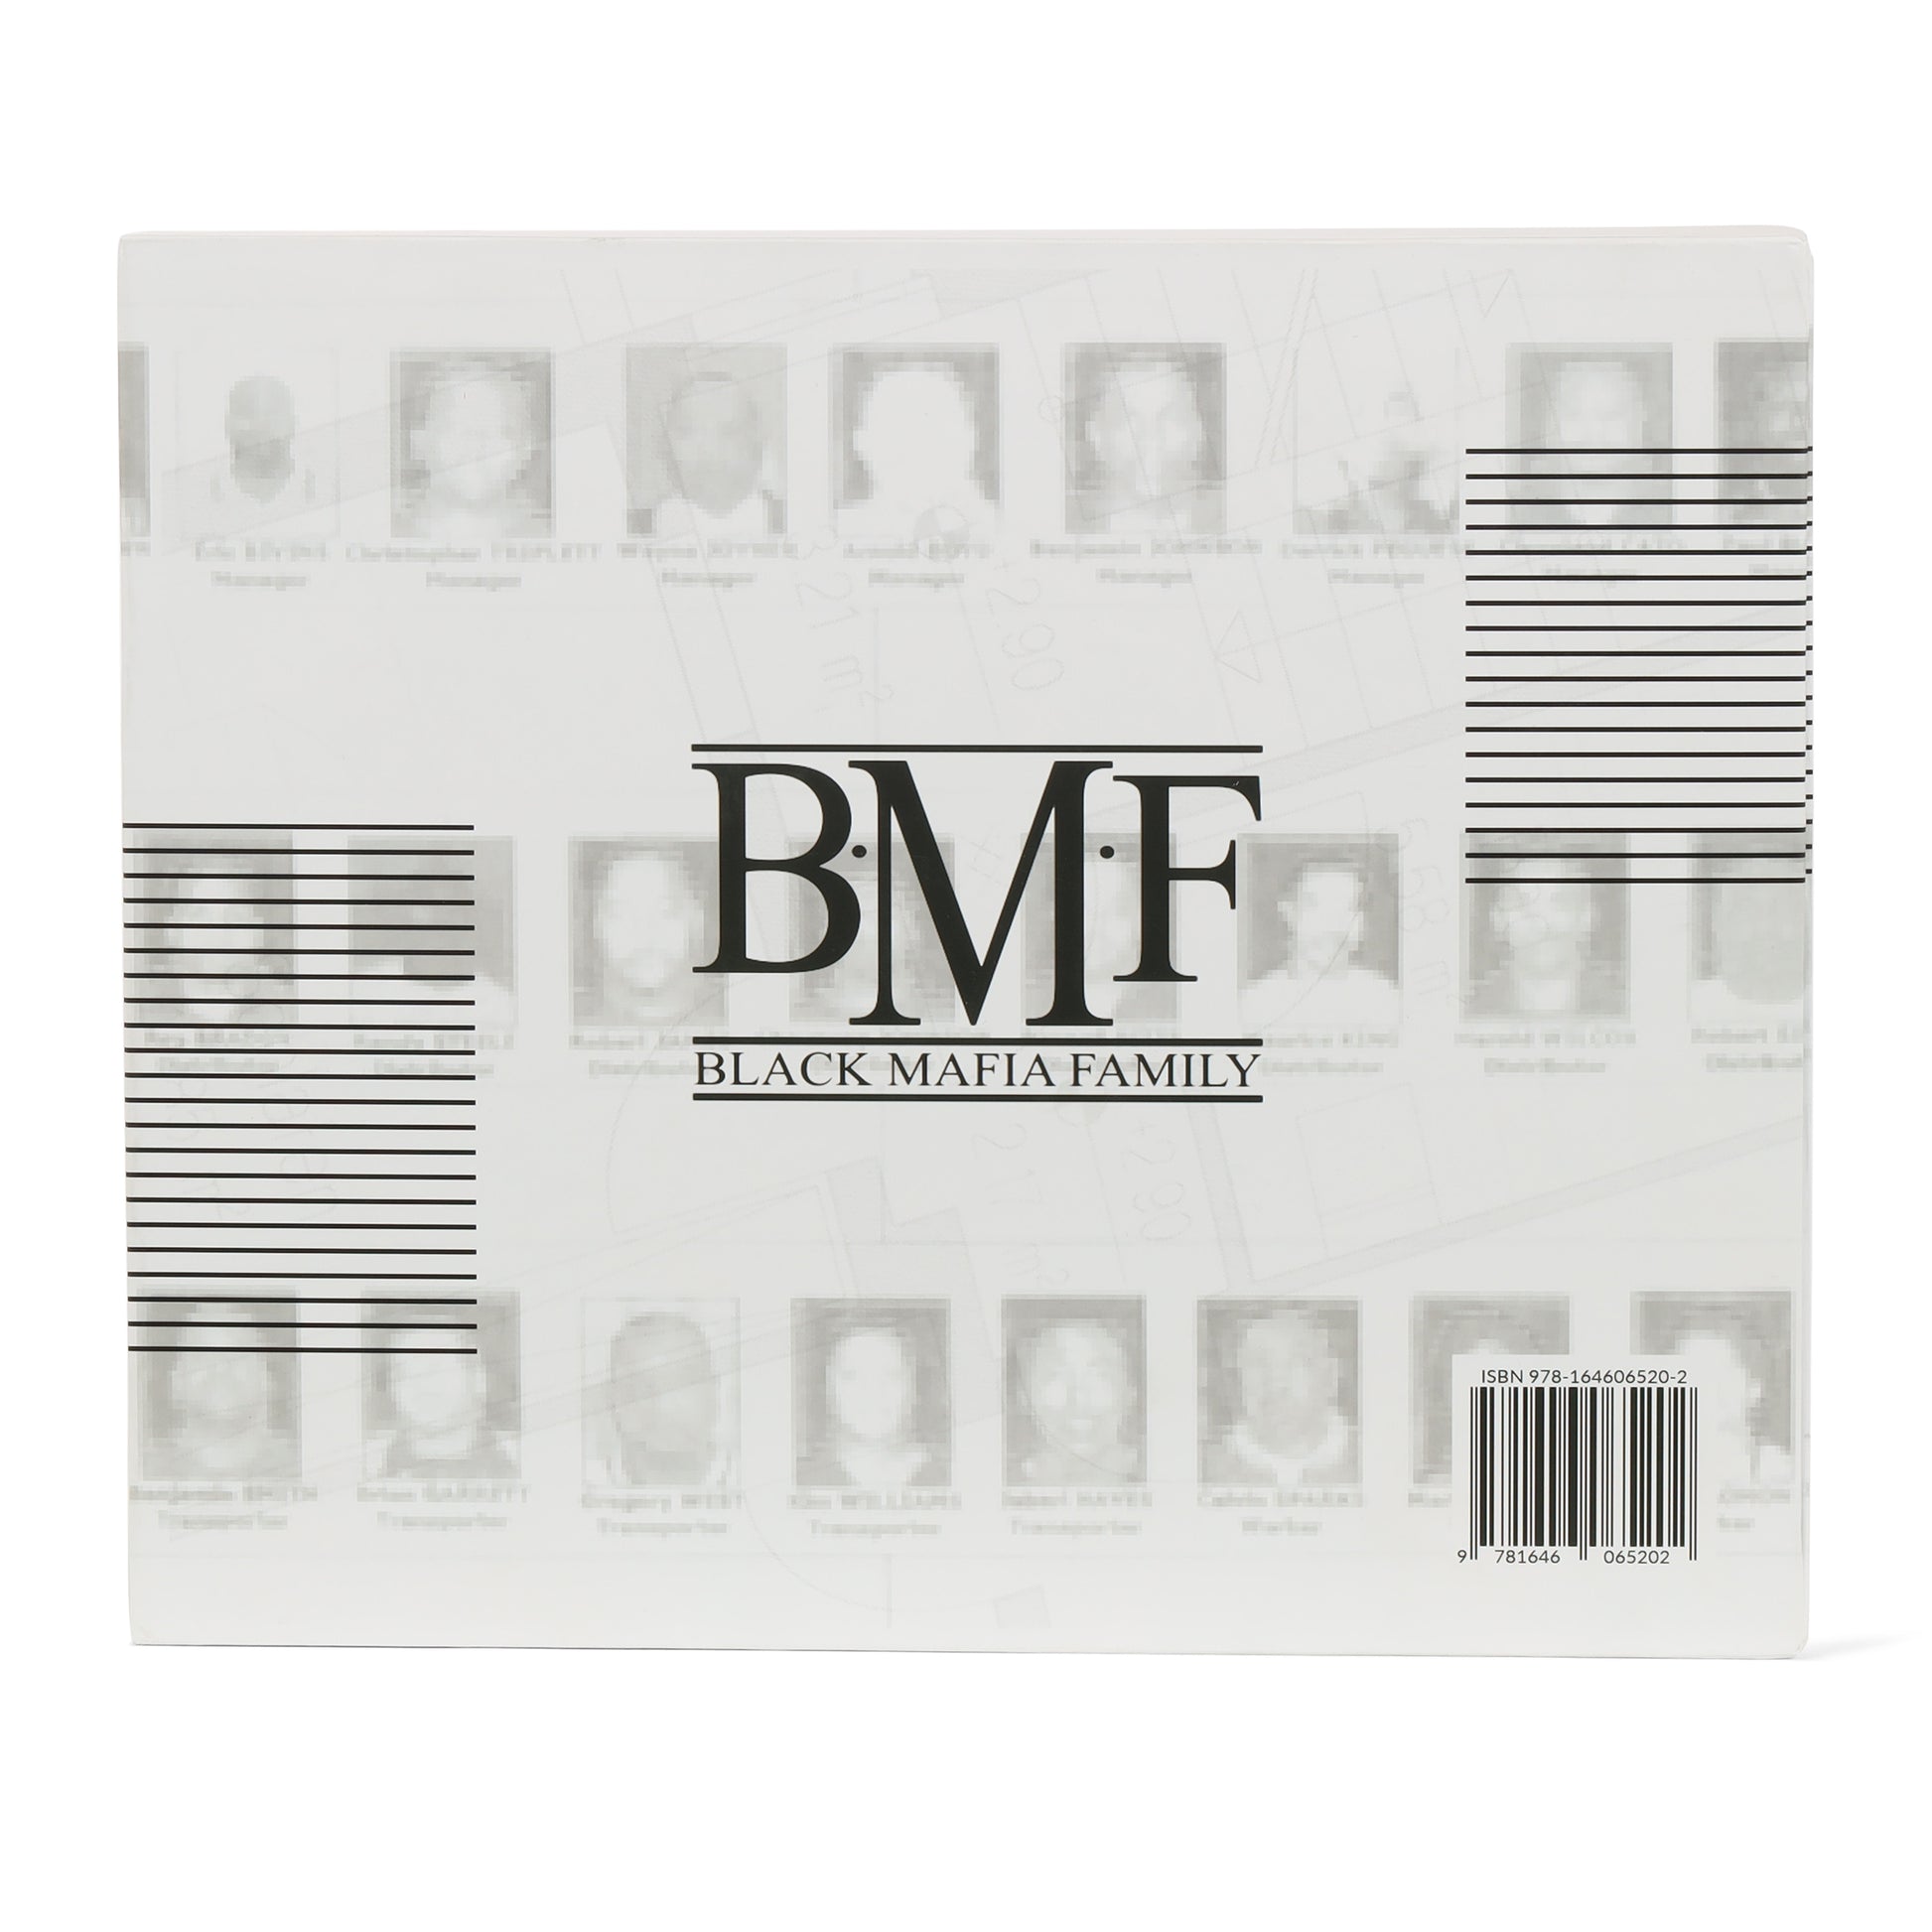 BMF Vol 2 Collectors Edition